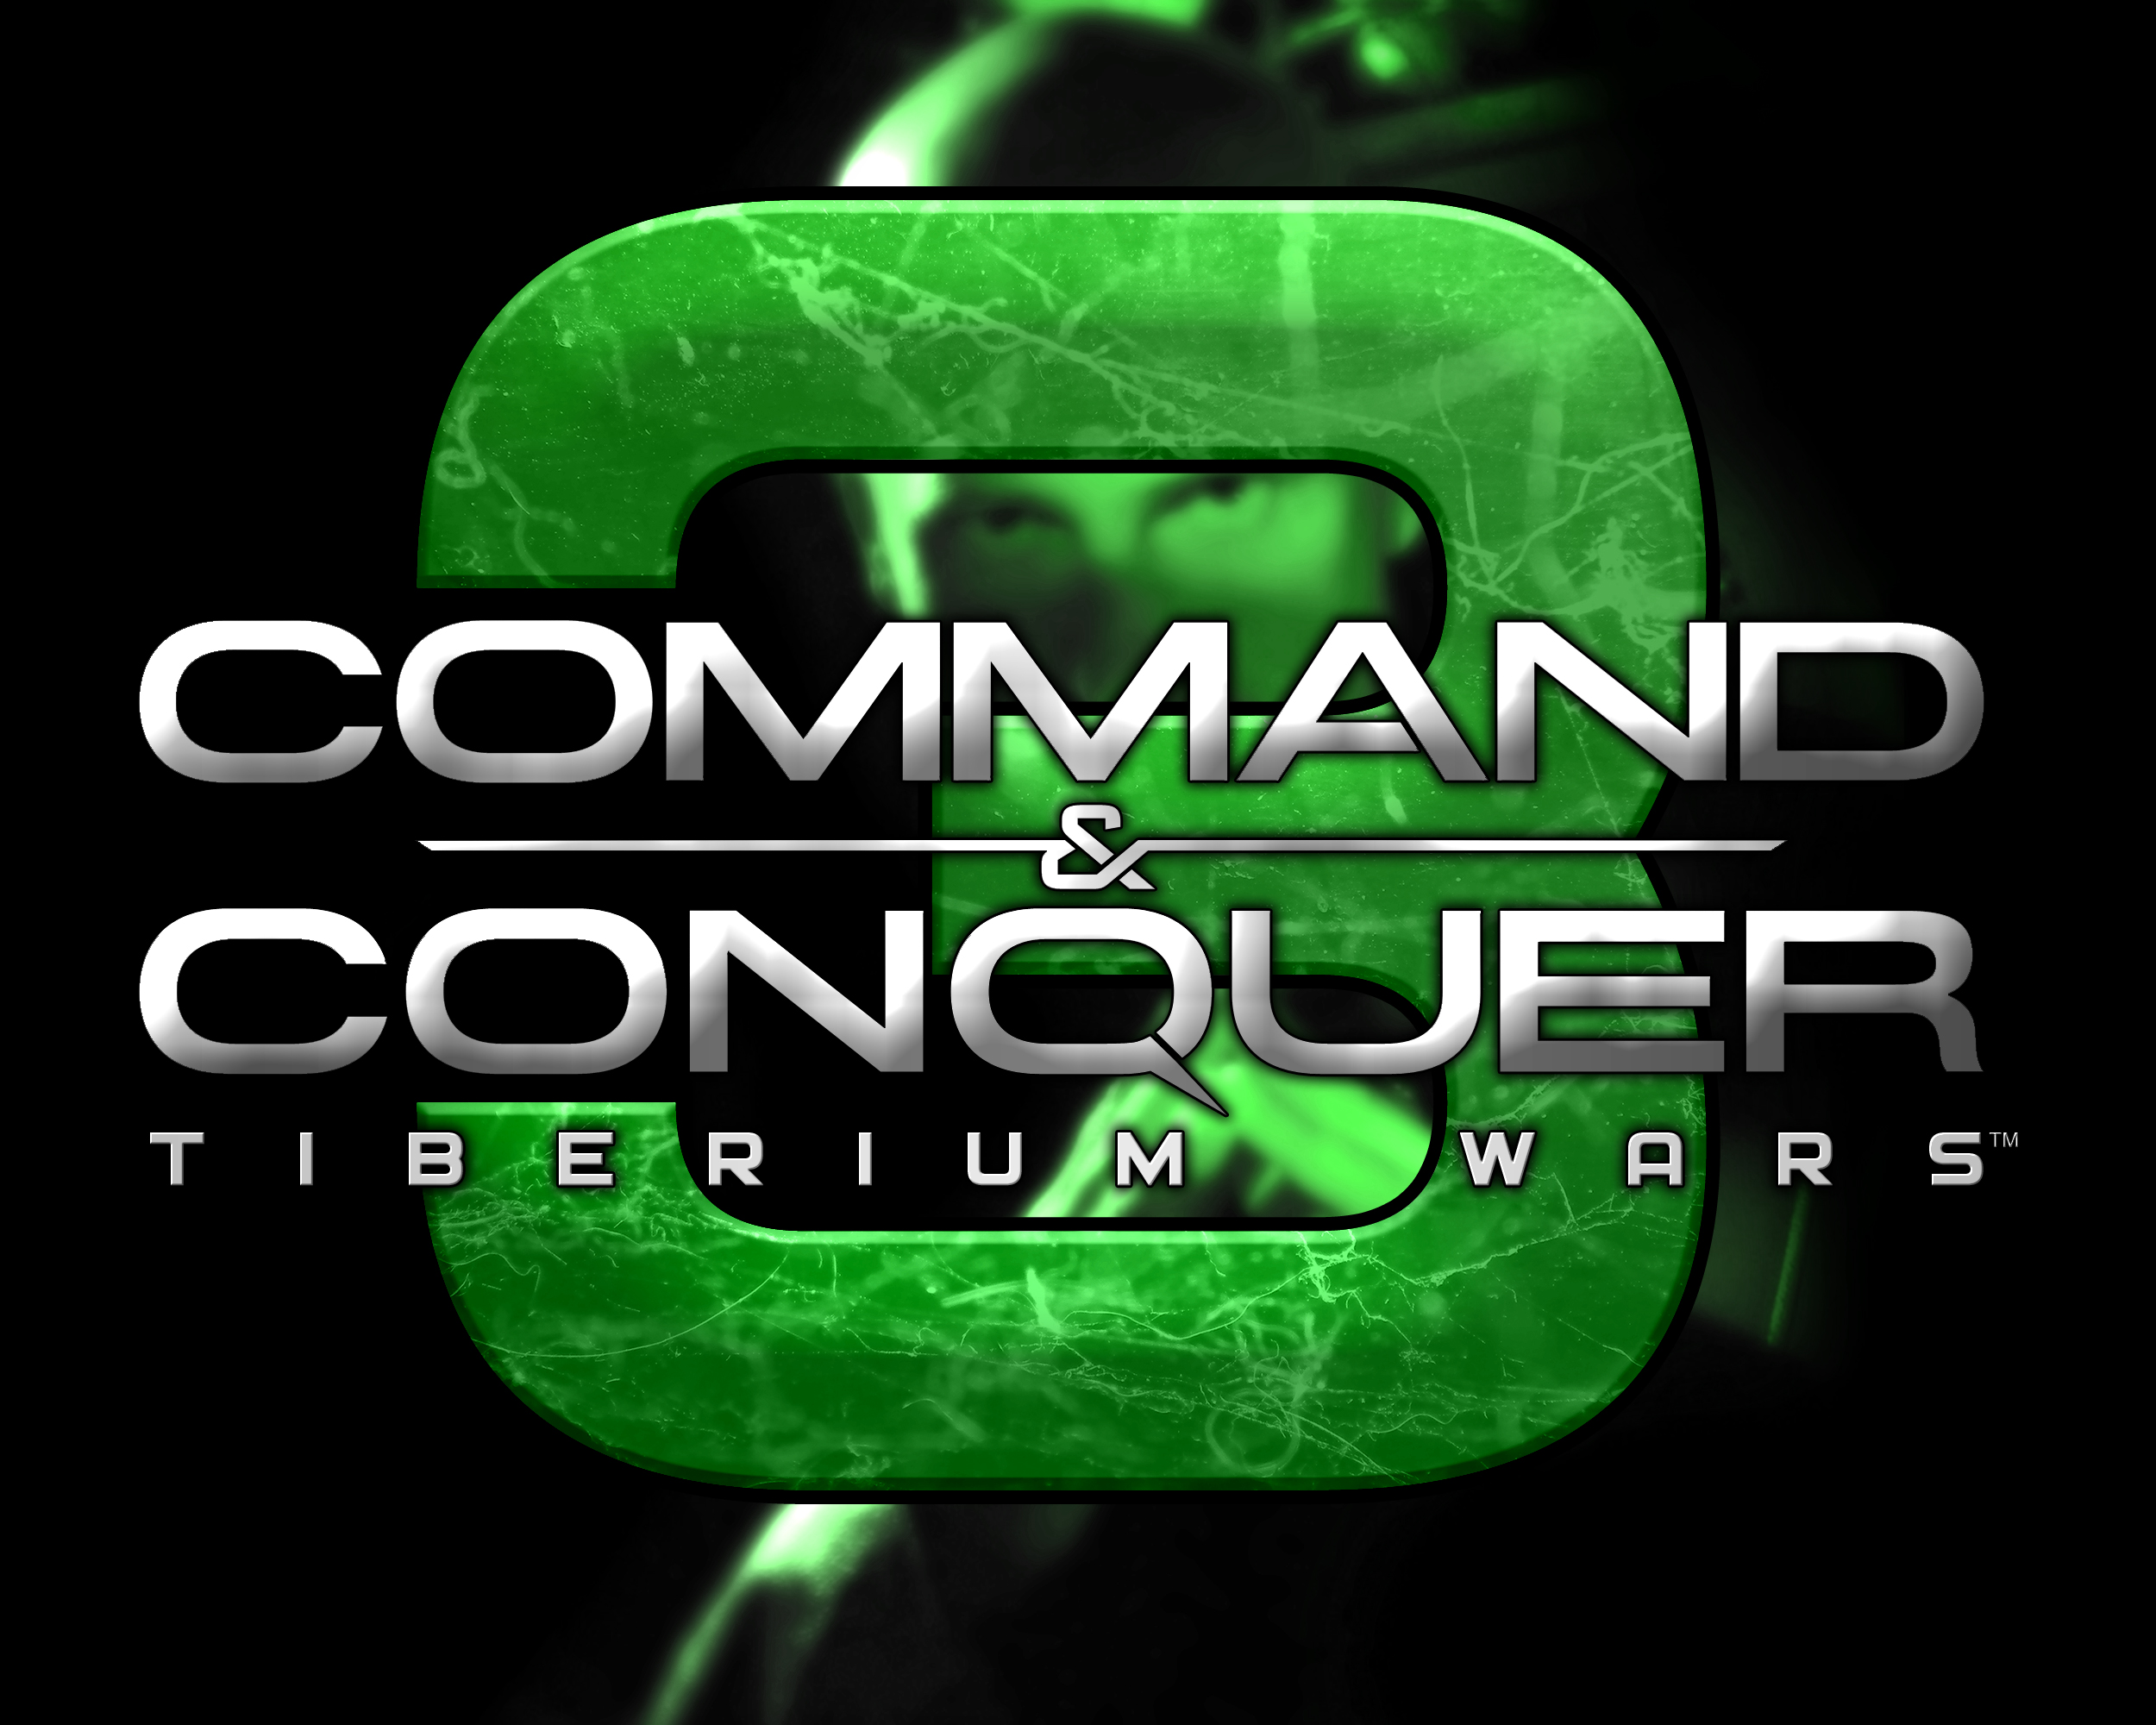 Command And Conquer 3 Tiberium Wars | НОД | Большая битва Блэка